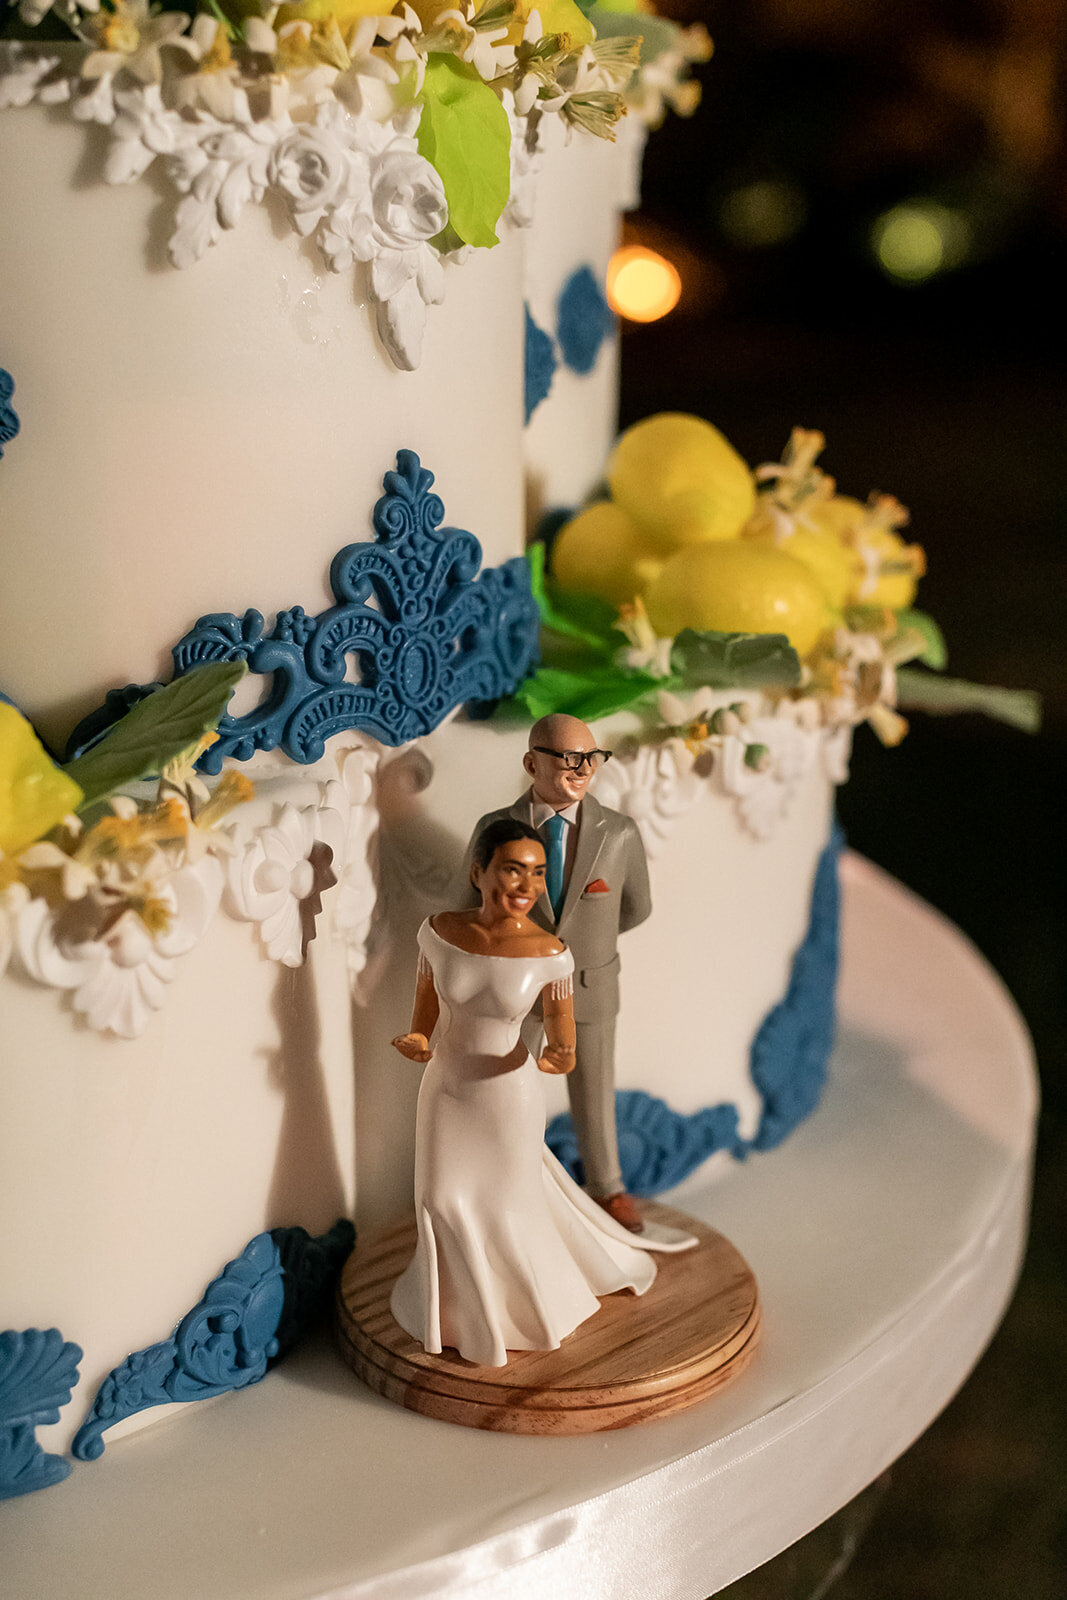 Luxury wedding cake details